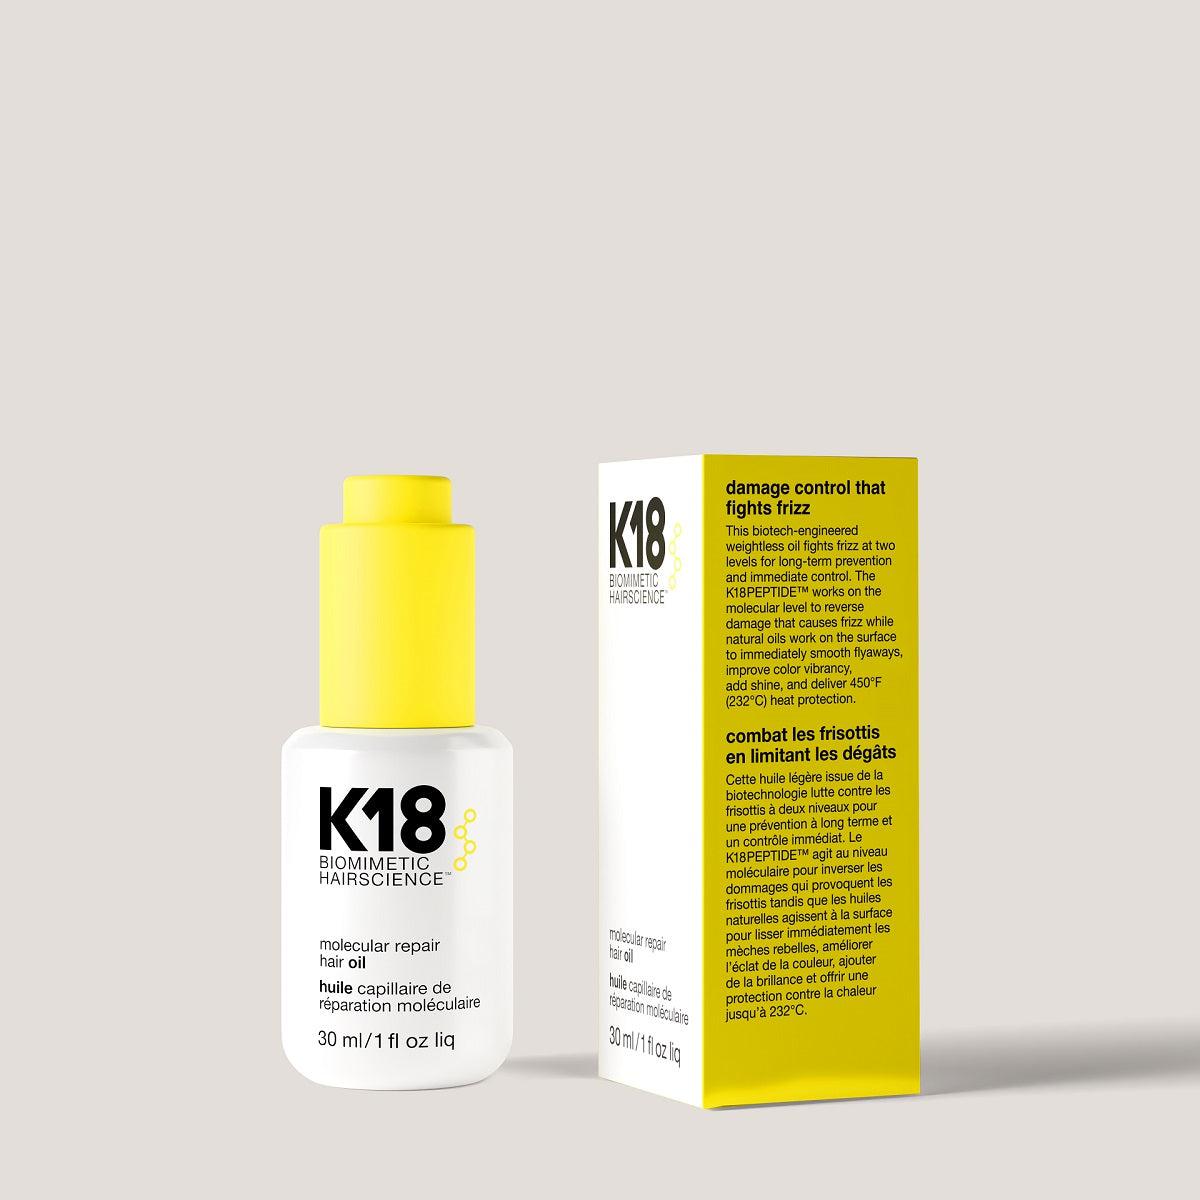 K18 Biomimetic hairscience molecular repair hair oil 30ml